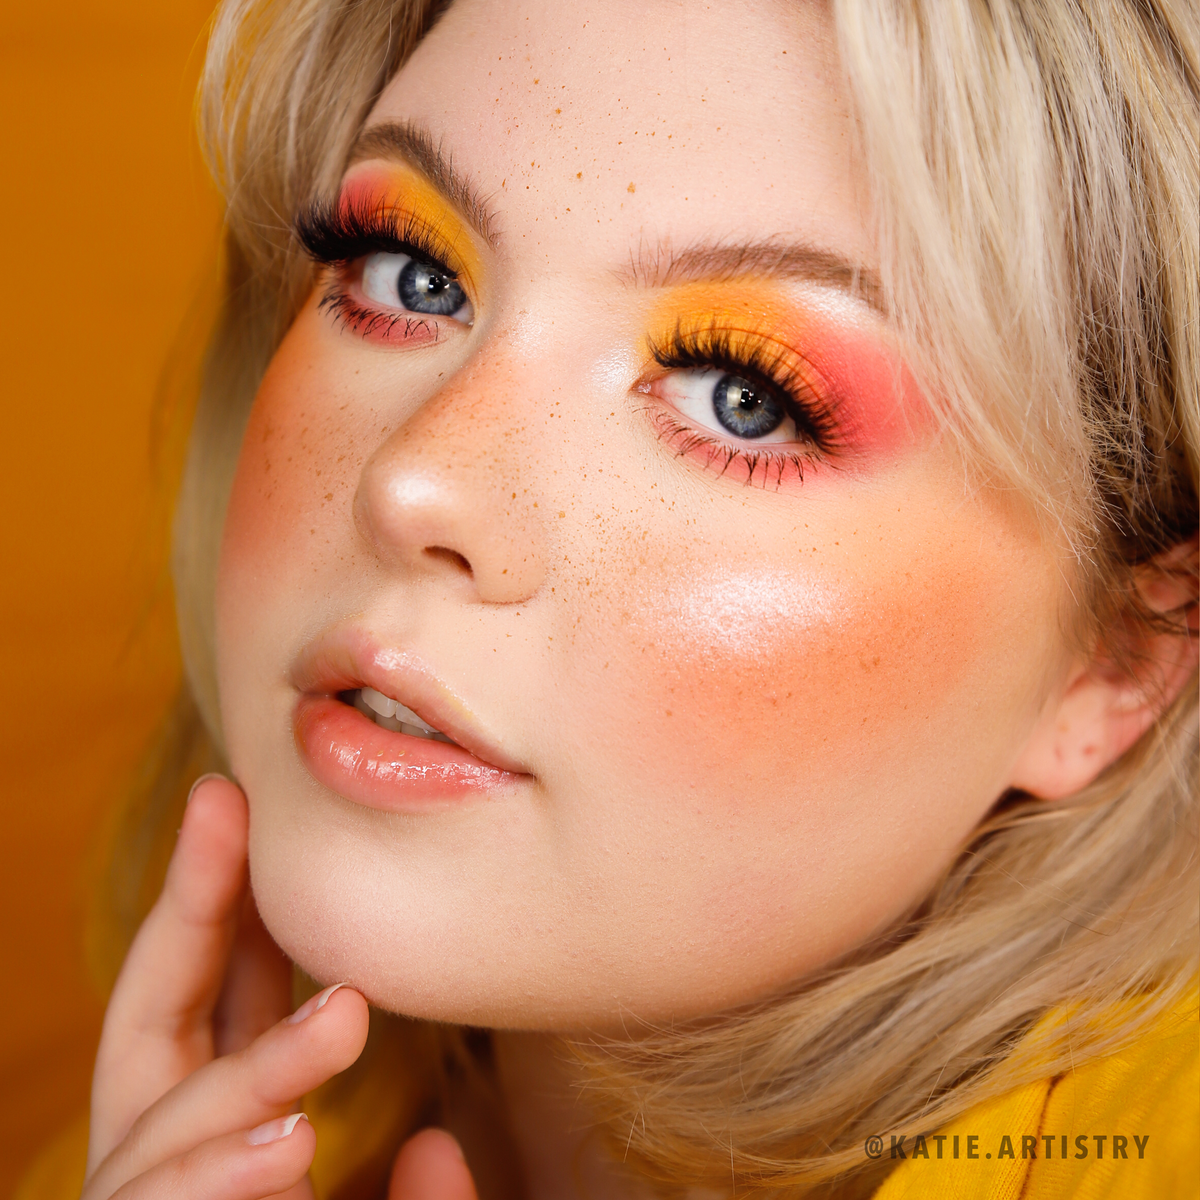 Moira Beauty - Signature Ombre Blush Orange Blossom